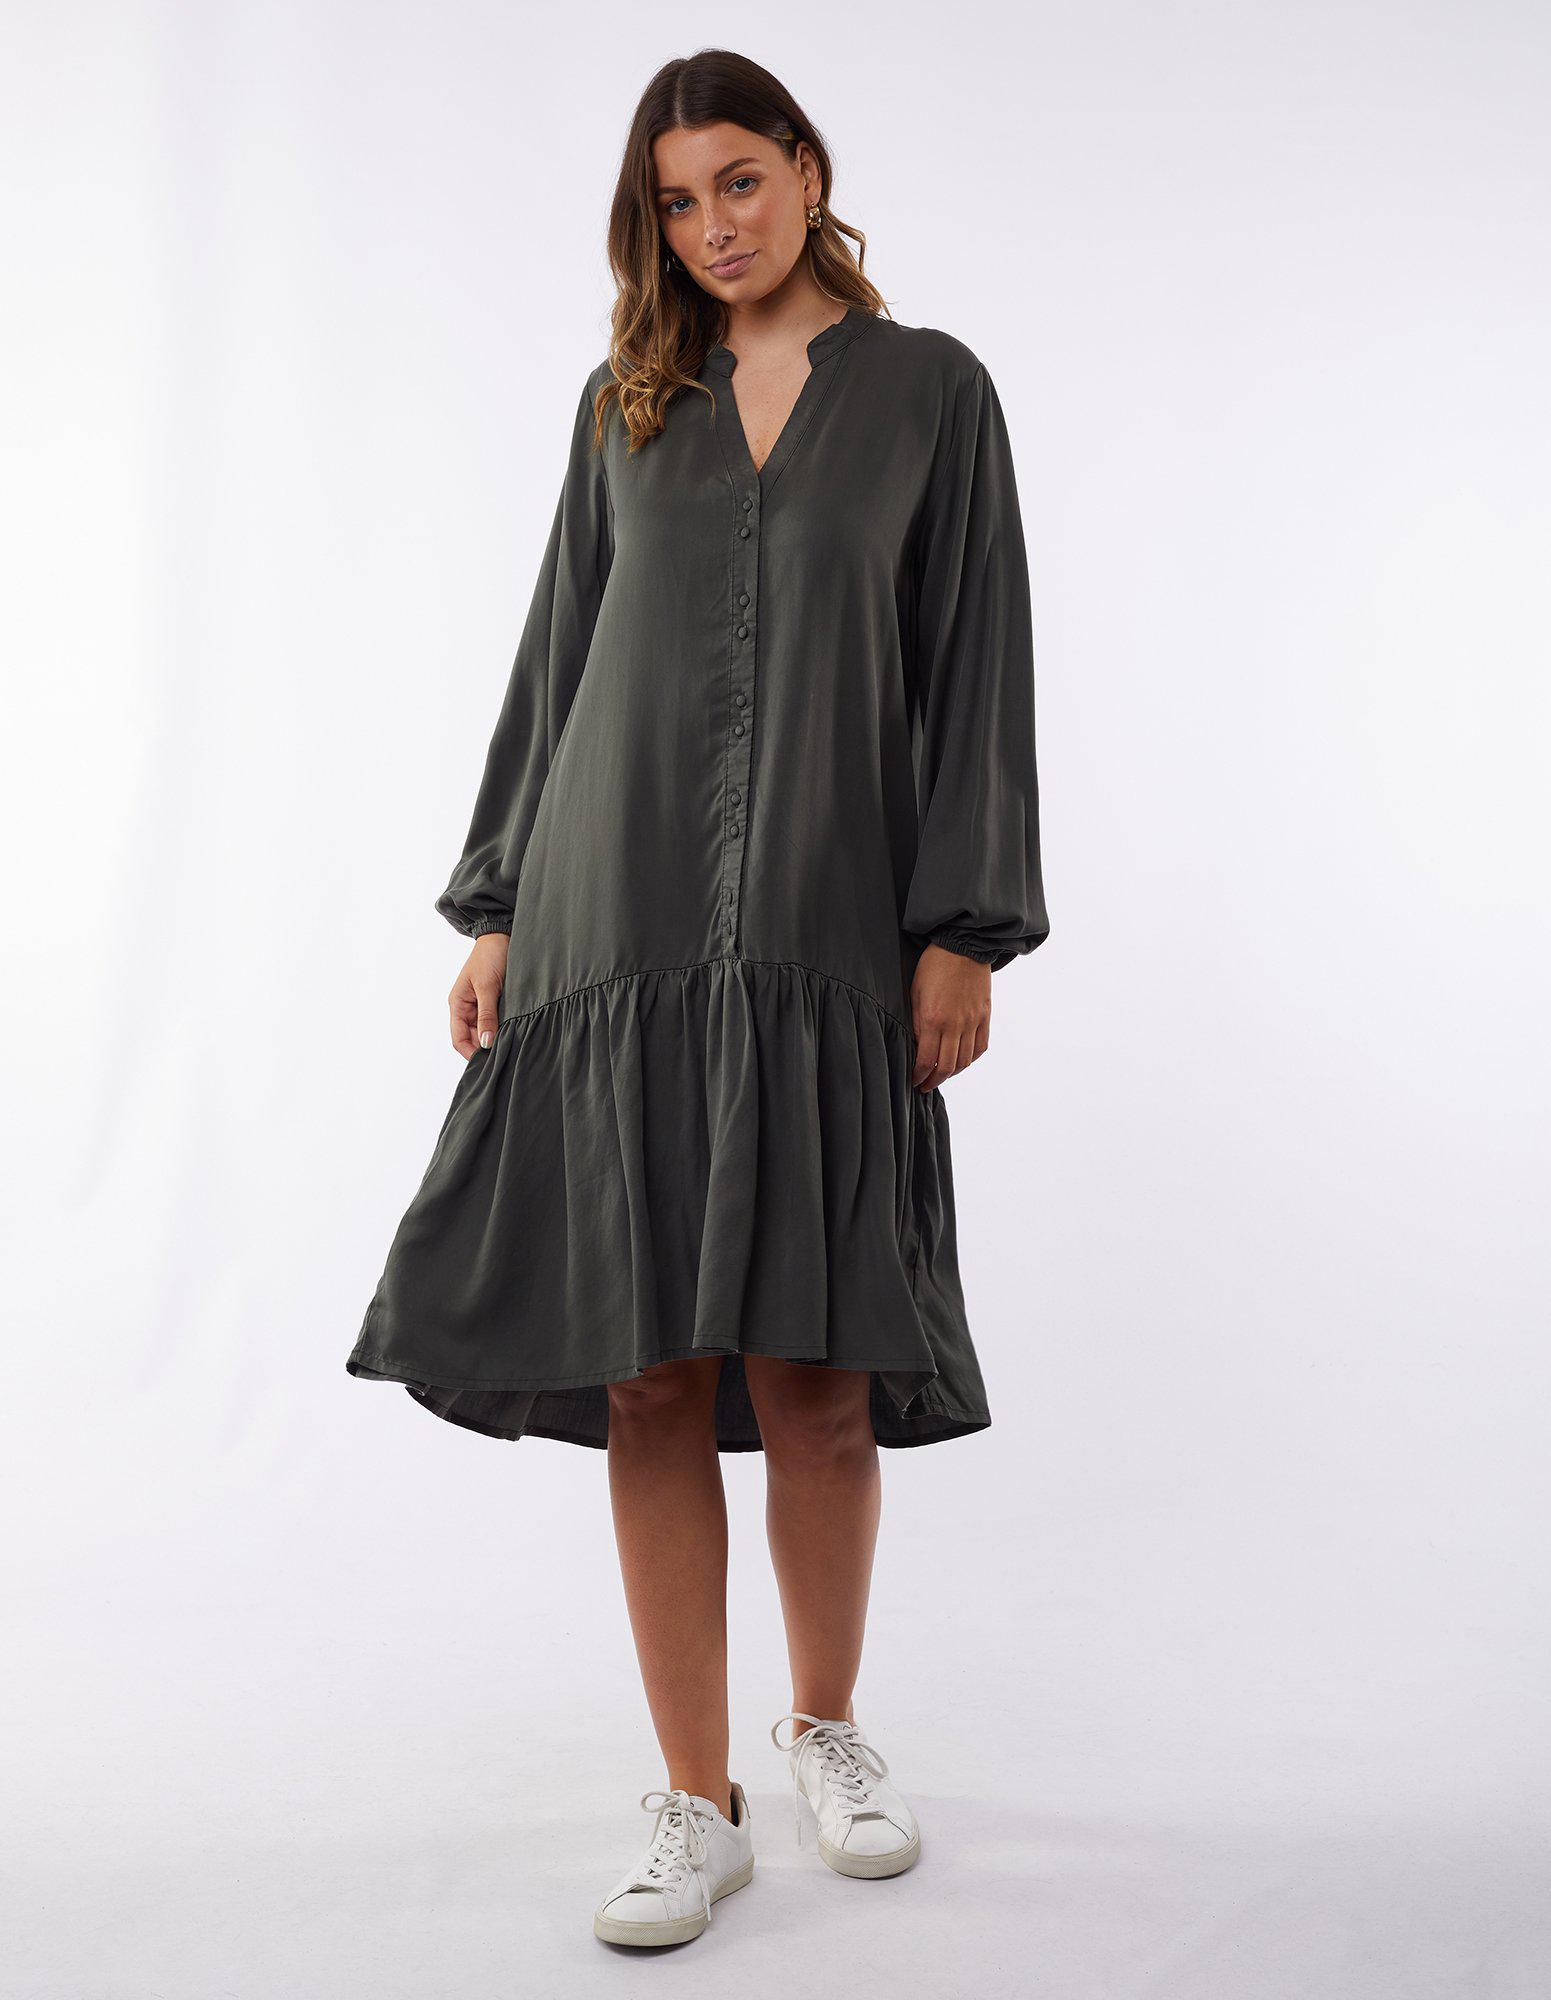 Yarra L/S Dress - Olive - FUDGE Gifts Home Lifestyle